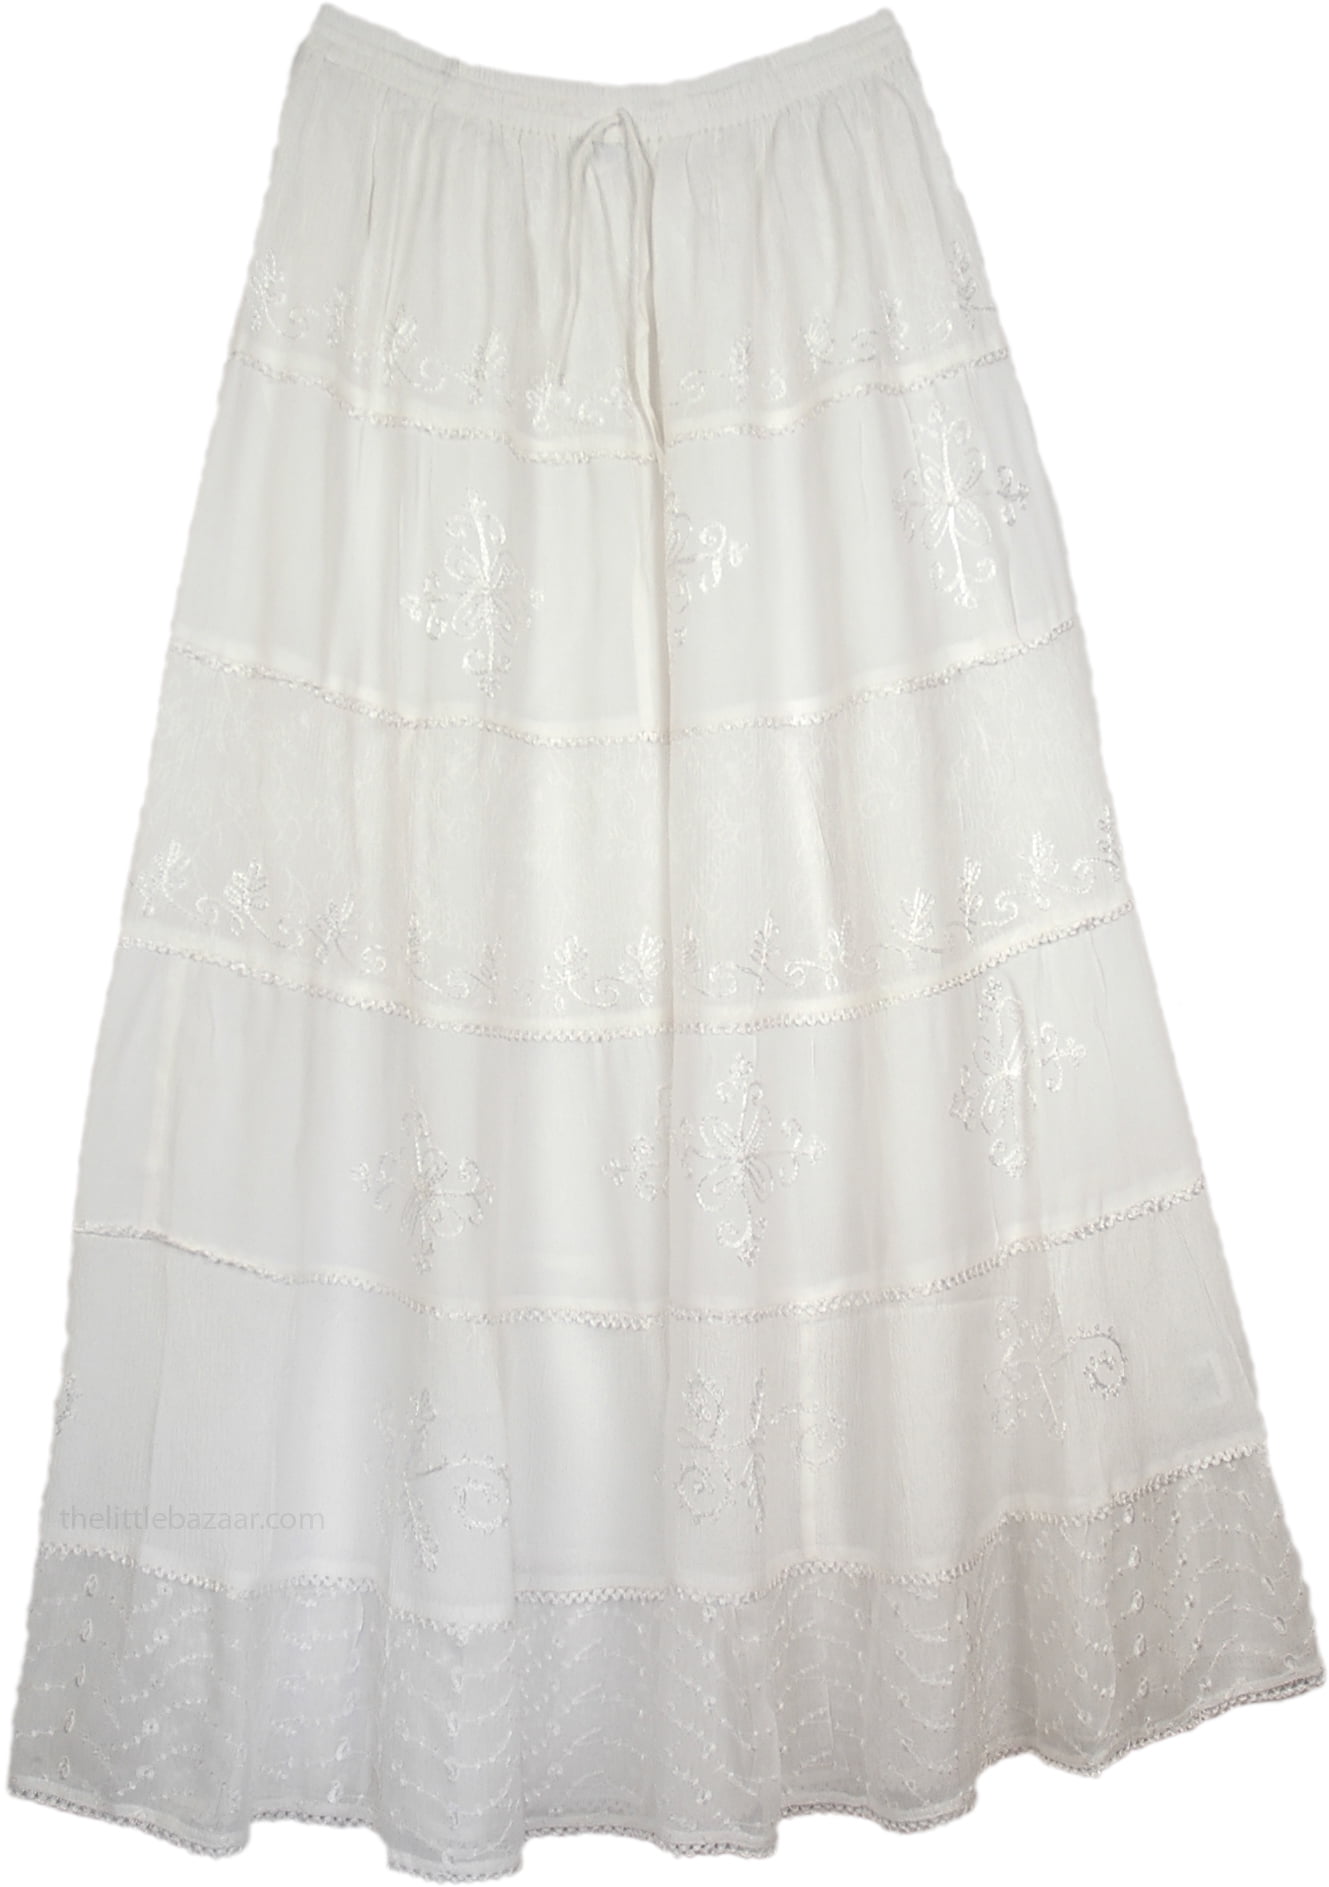 Long White Rayon Maxi Skirt Embroidered - Walmart.com